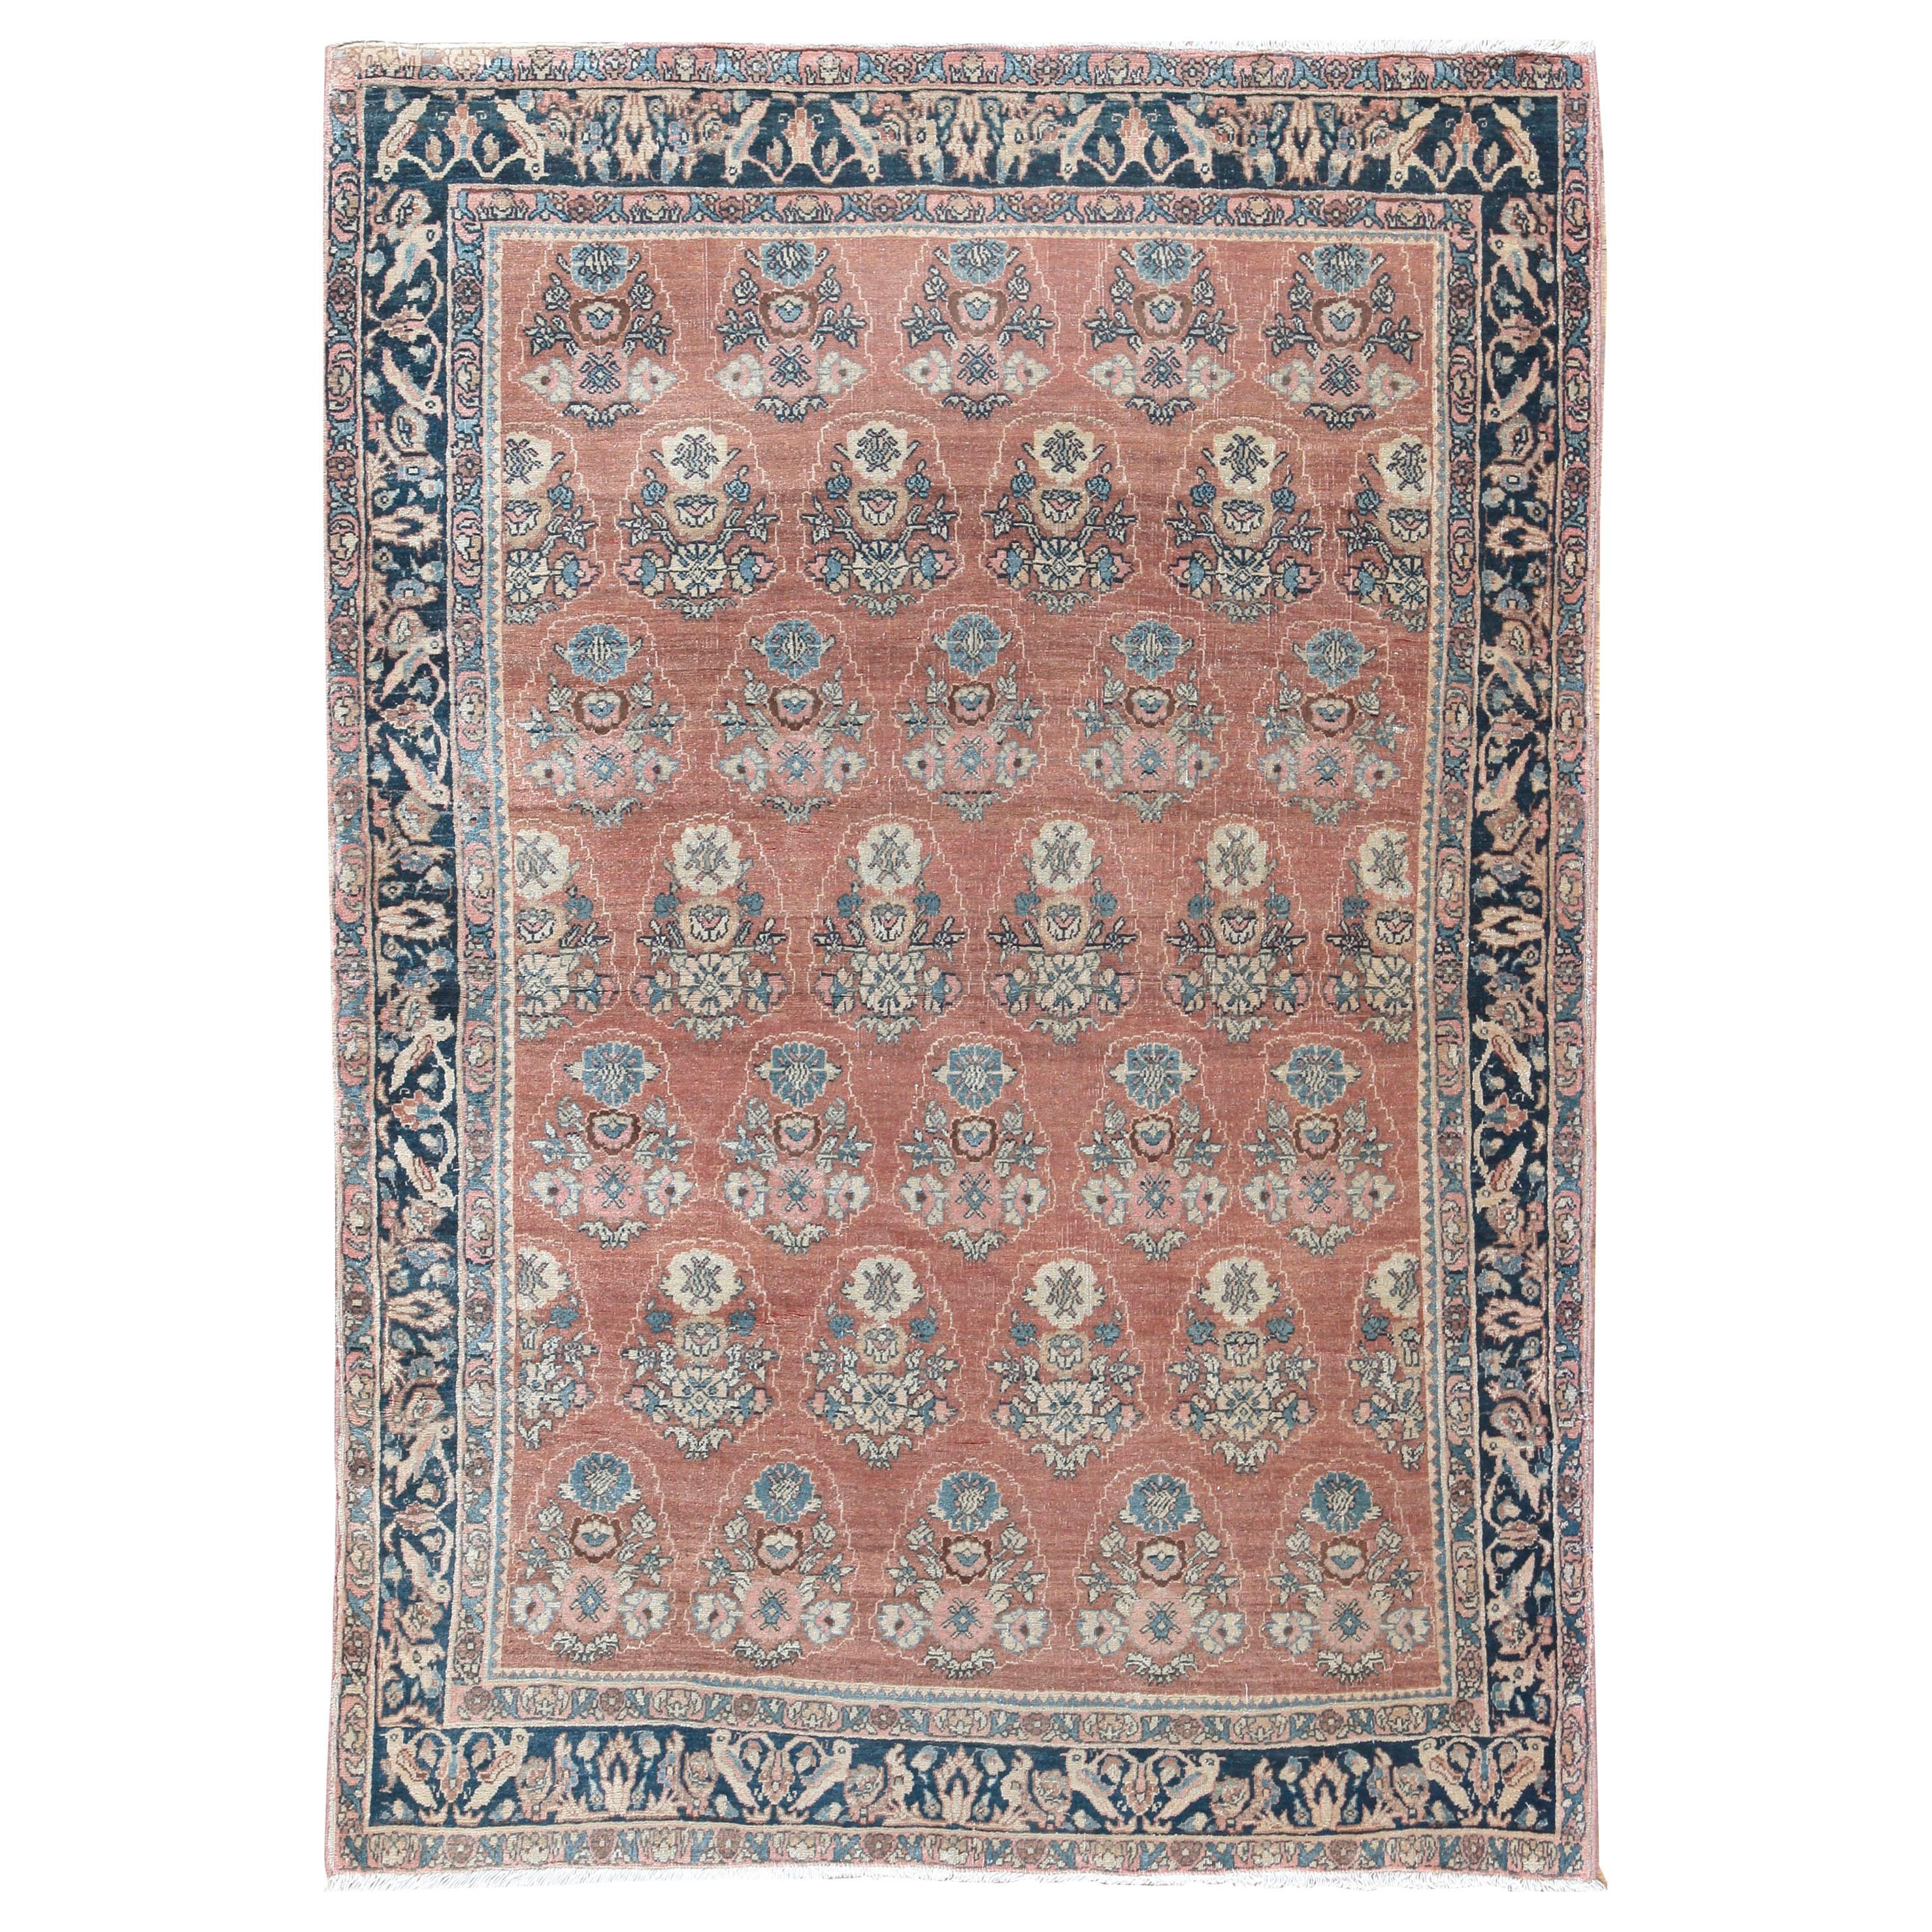 Antiker persischer Bidjar-Teppich, um 1900  3'7 x 5'3 m